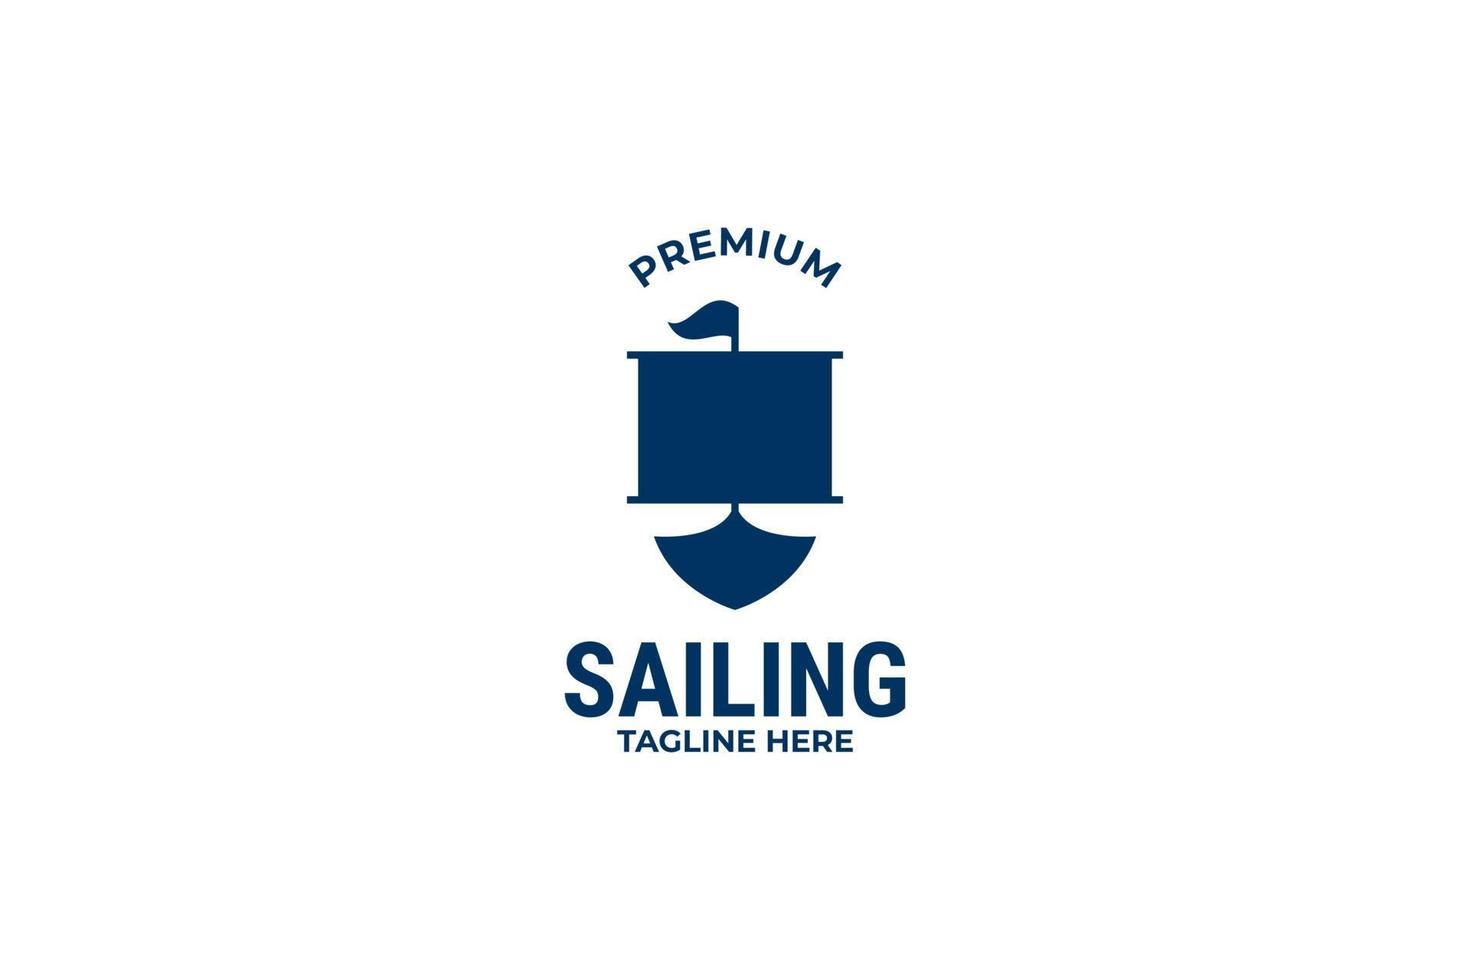 Sailing icon with sea logo design vector template illustration idea